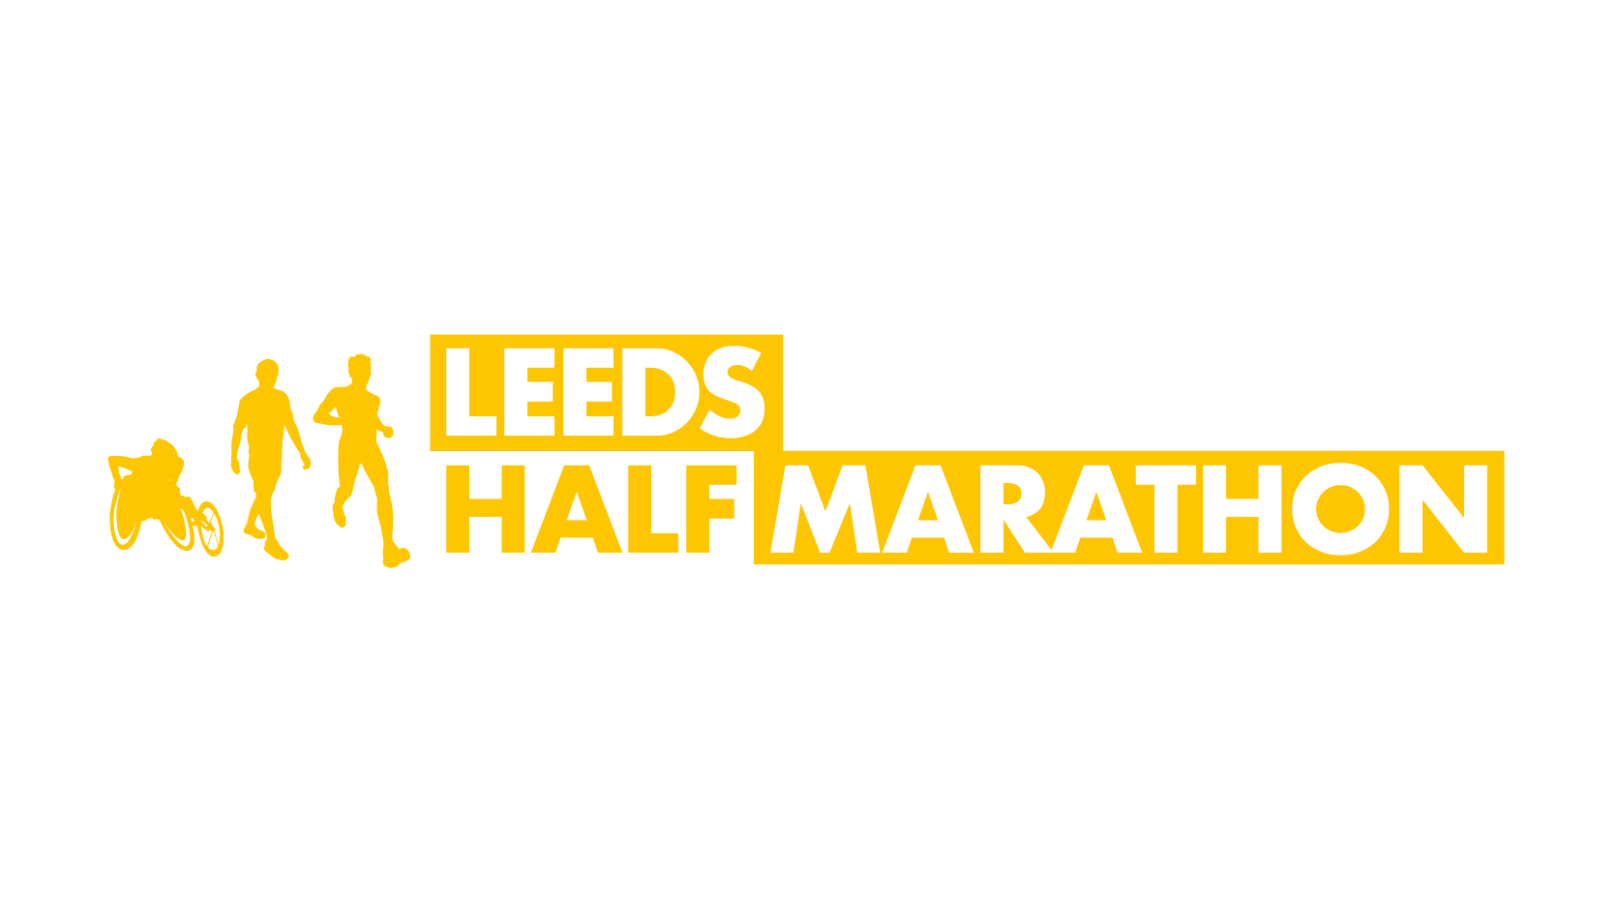 Leeds half marathon